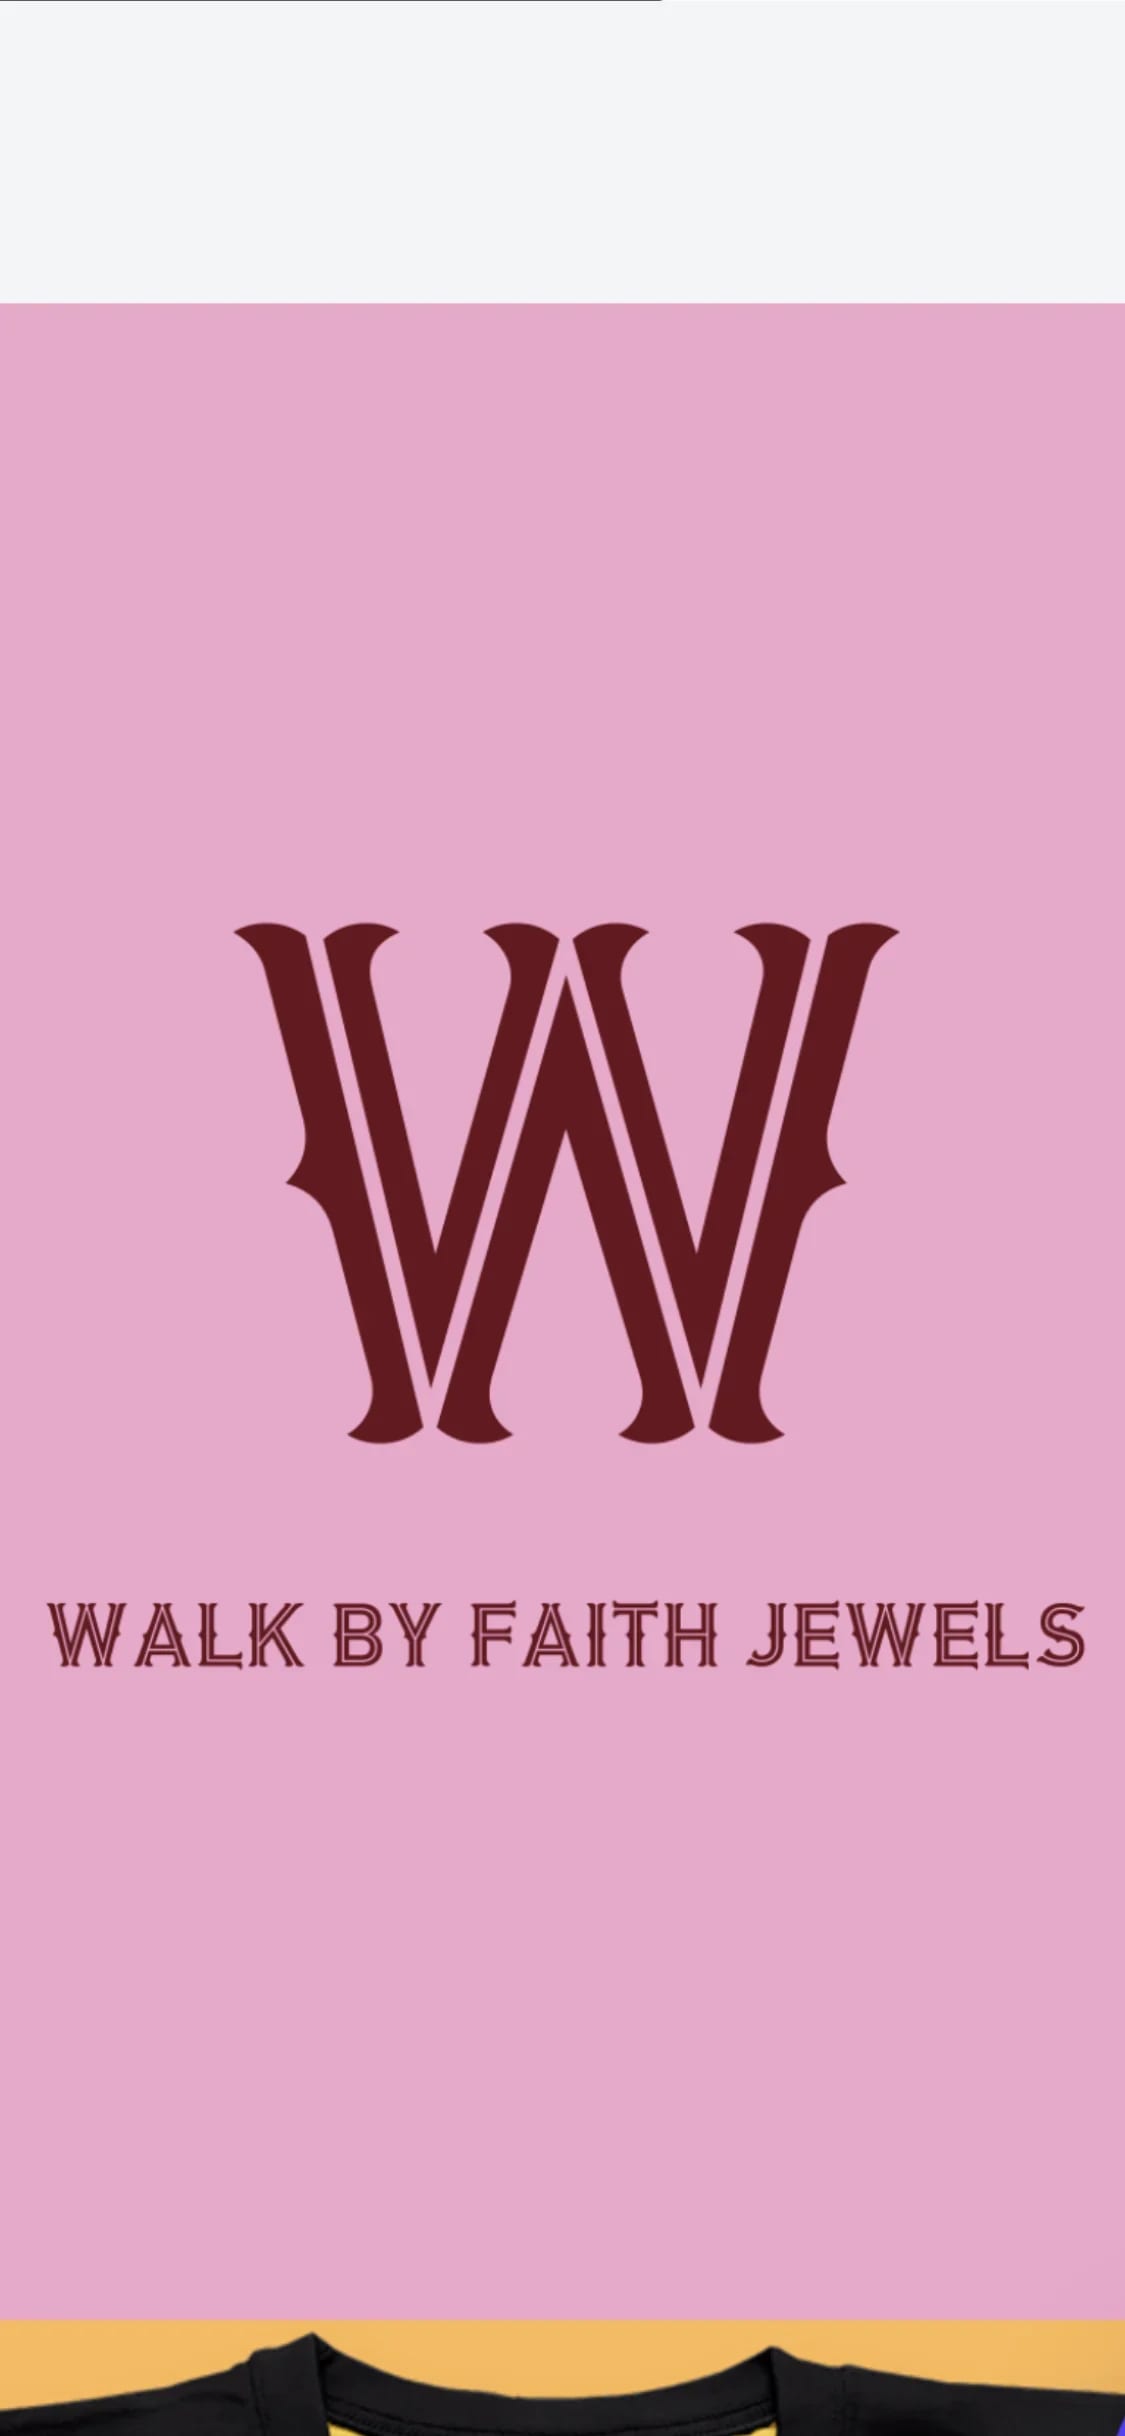 Walk By Faith Jewels